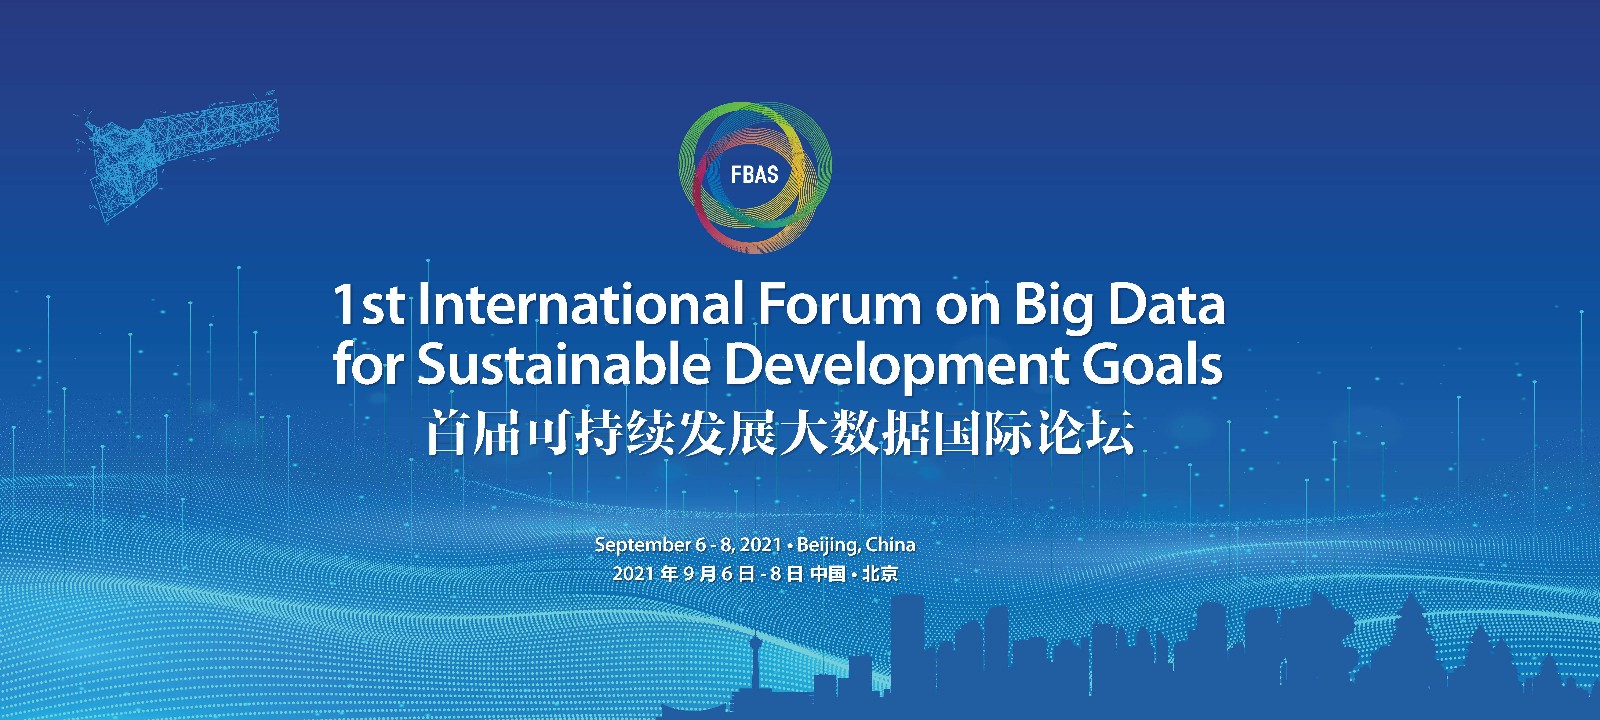 1st International Forum on Big Data for Sustainable Development Goals  (First Announcement)